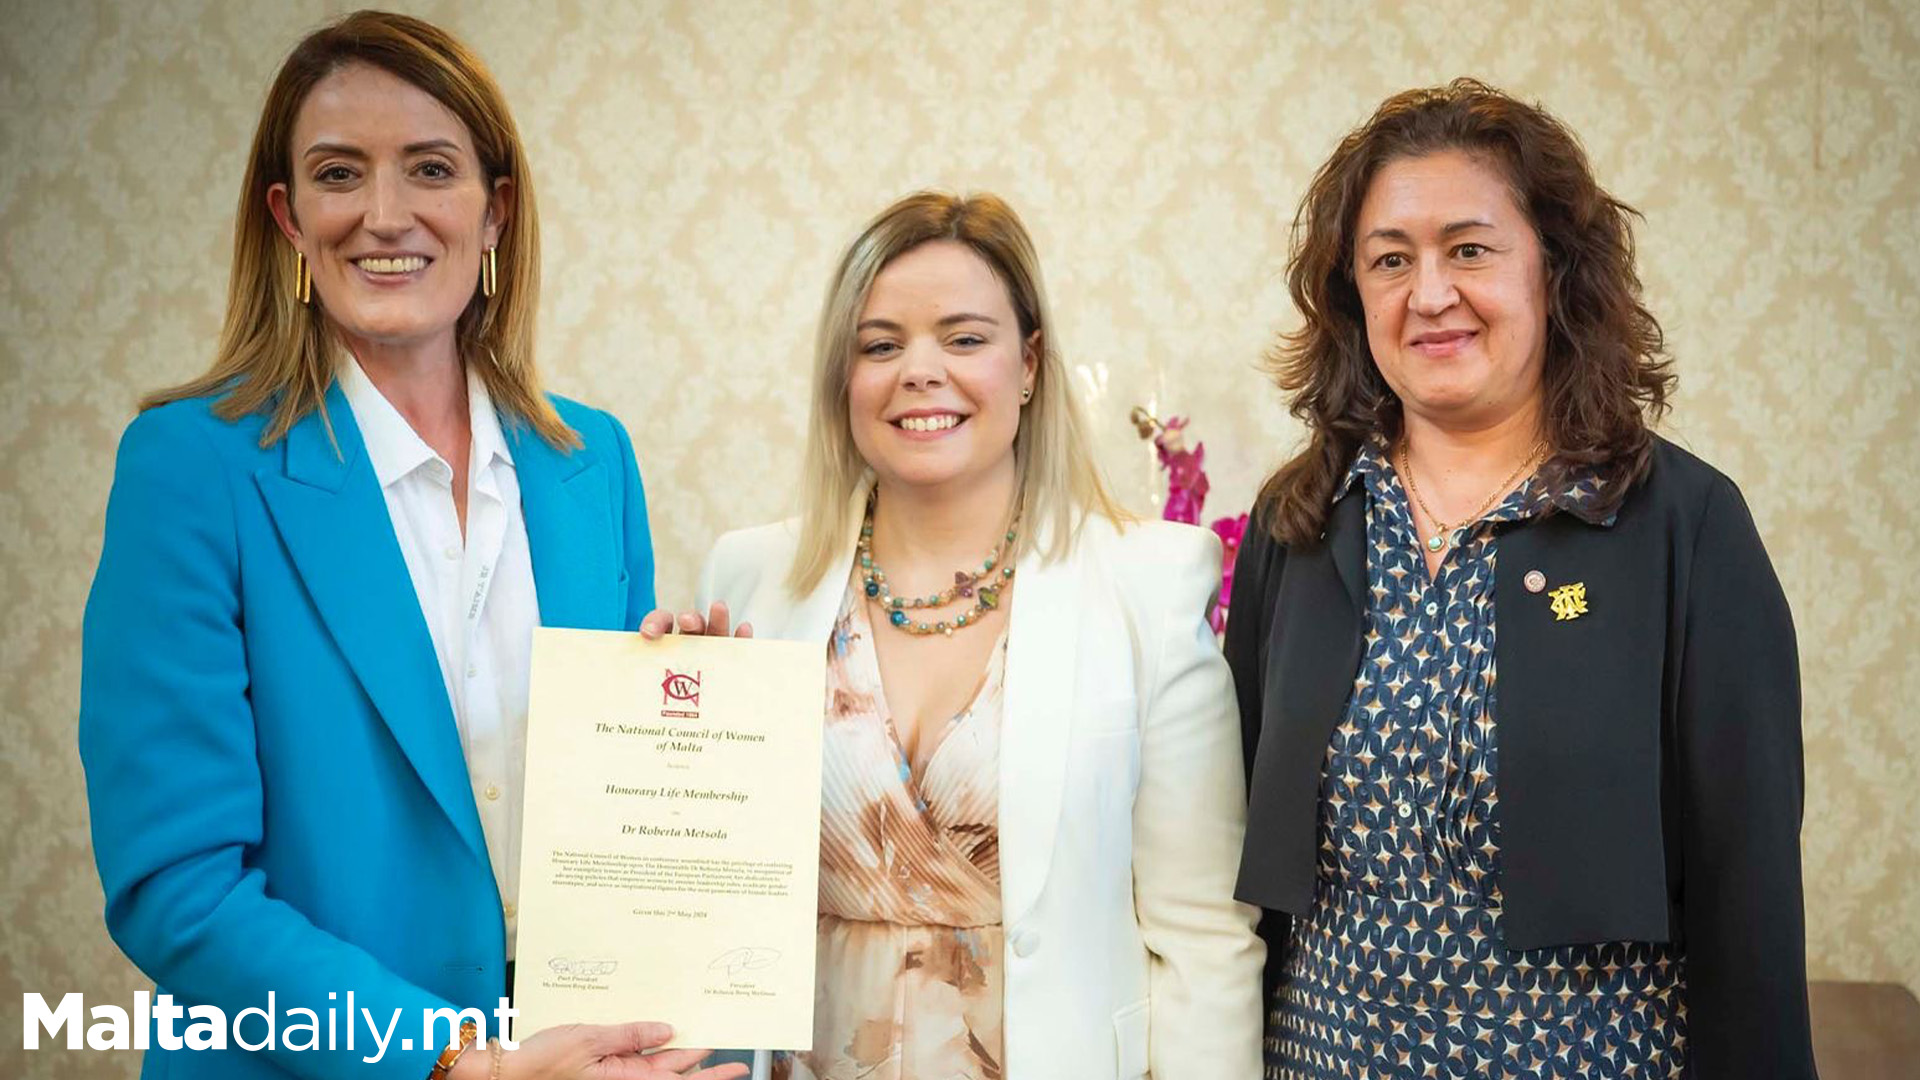 Roberta Metsola Awarded Honorary Life Membership by National Council of Women